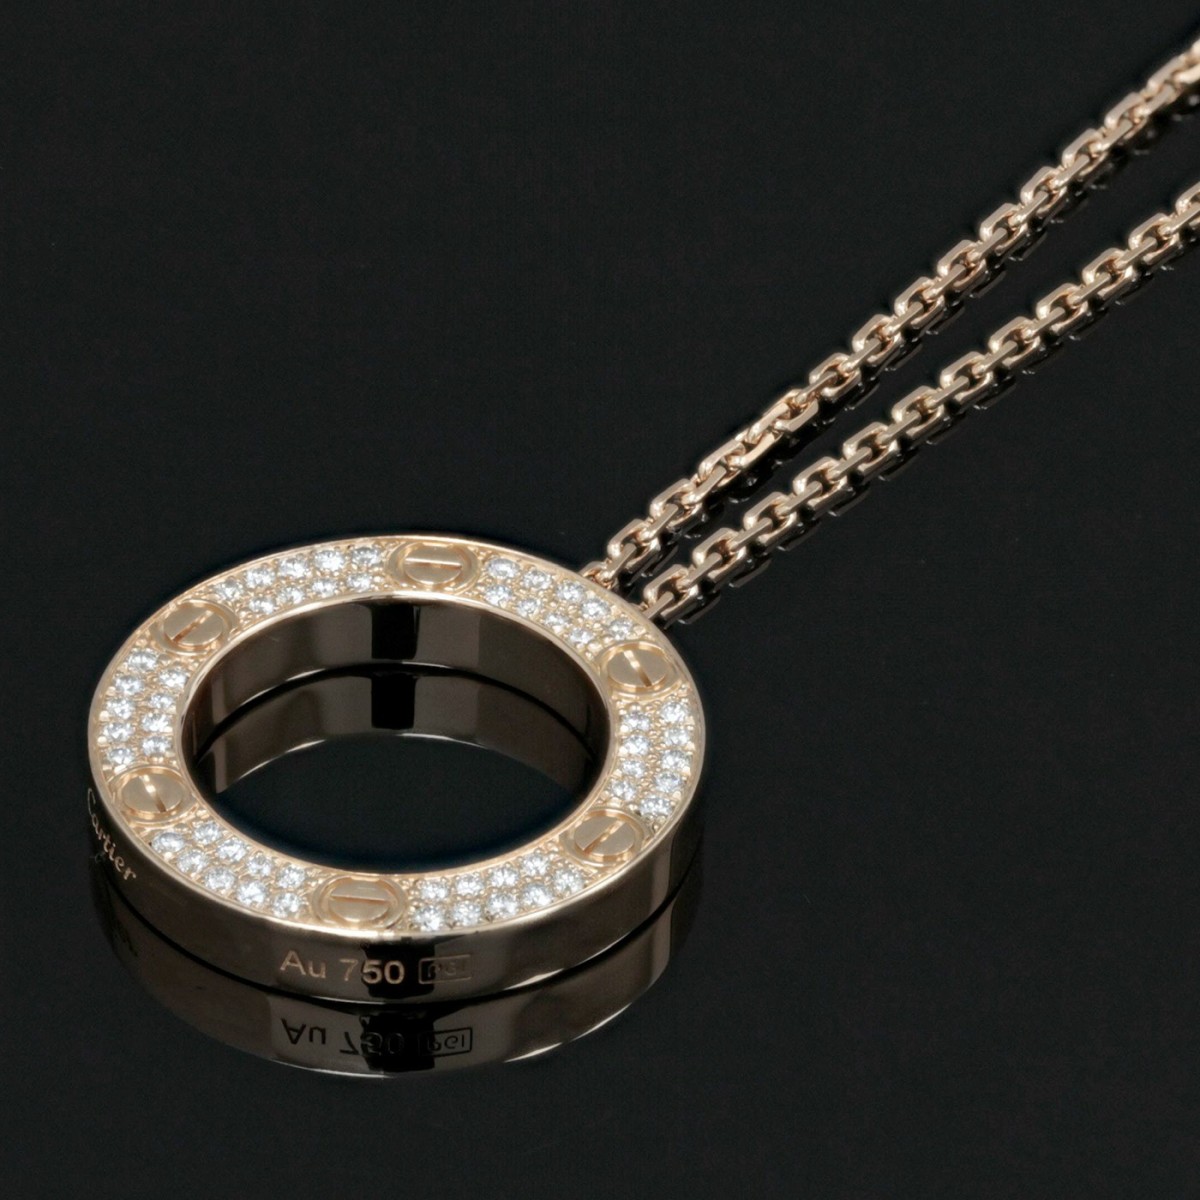 CRB7058400 - LOVE necklace, diamond-paved - Yellow gold, diamonds - Cartier